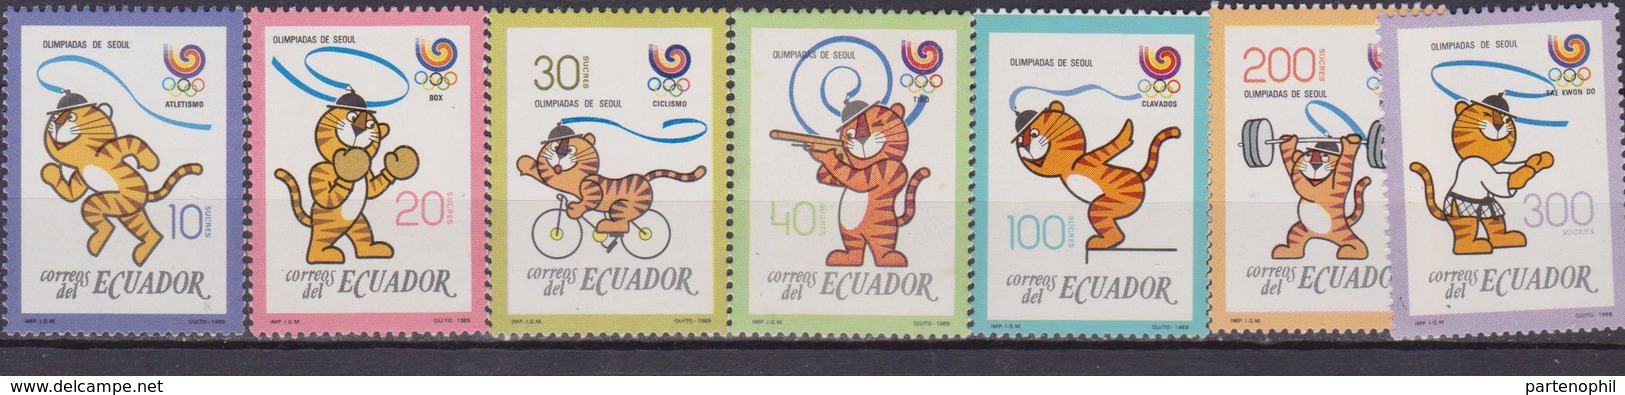 Ecuador 1163/69 1989 Juegos Olímpicos Olympic Games Seul MNH - Estate 1988: Seul